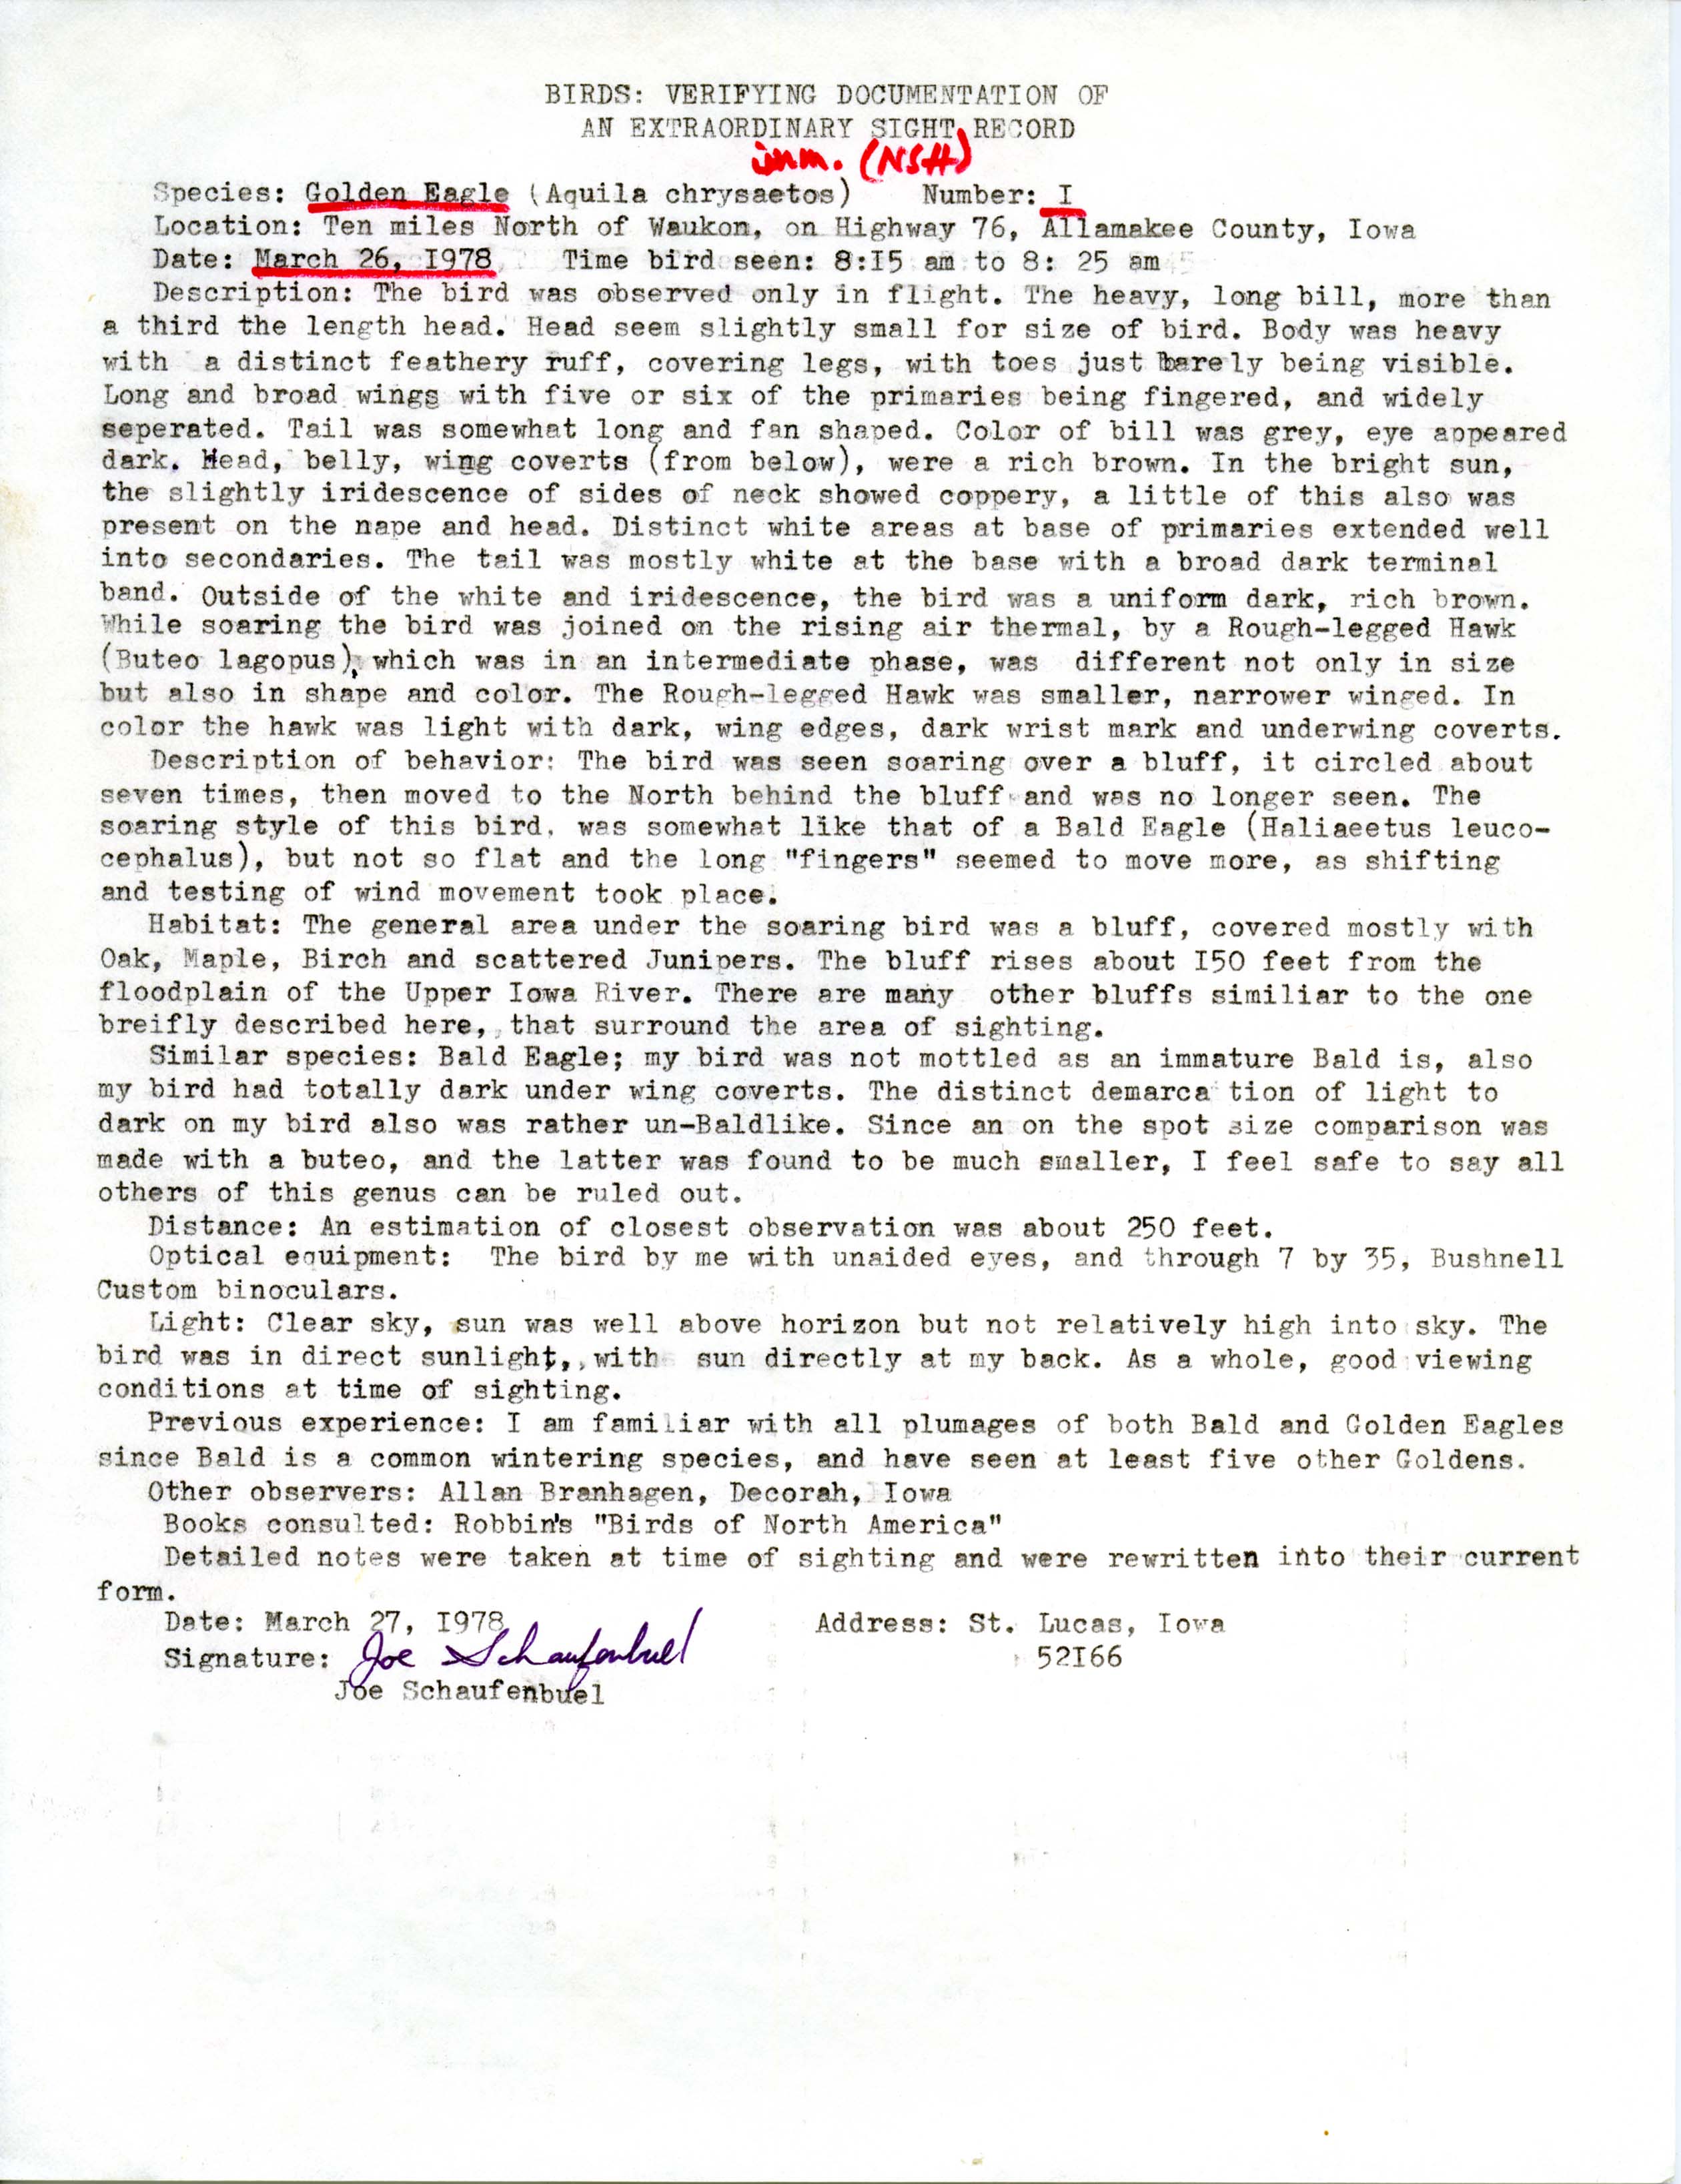 Rare bird documentation form for Golden Eagle near Waukon, 1978